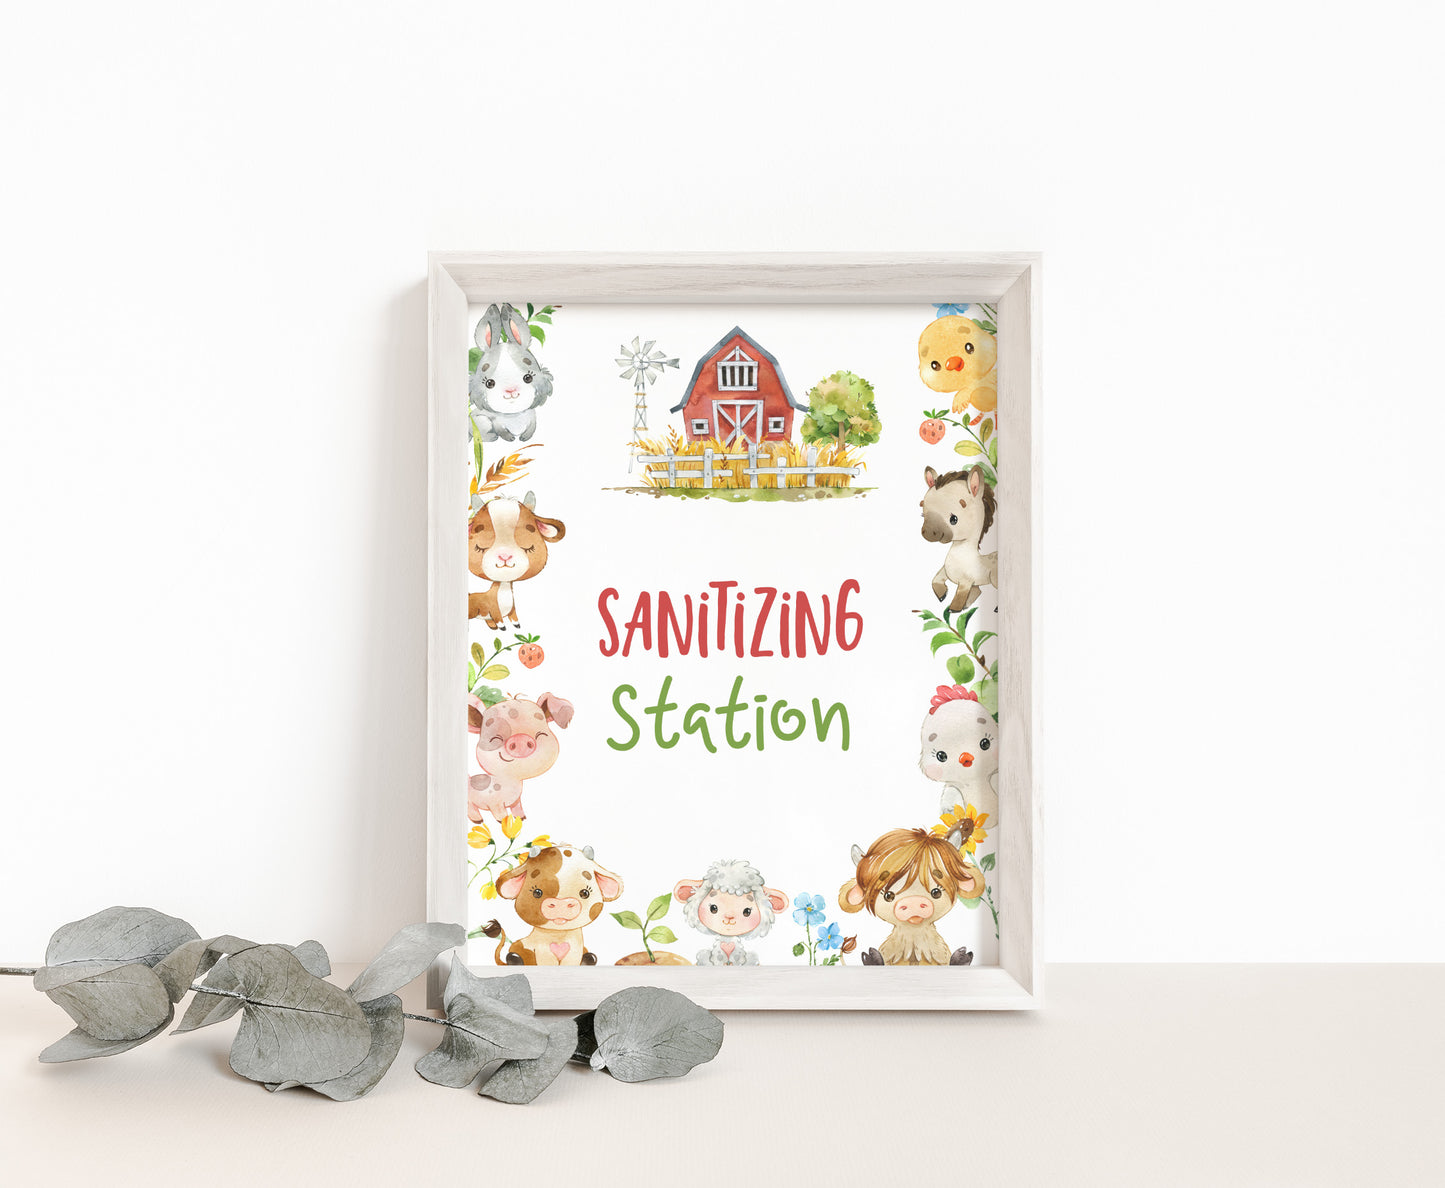 Sanitizing Station Sign Printable | Farm Party Table Decoration - 11d